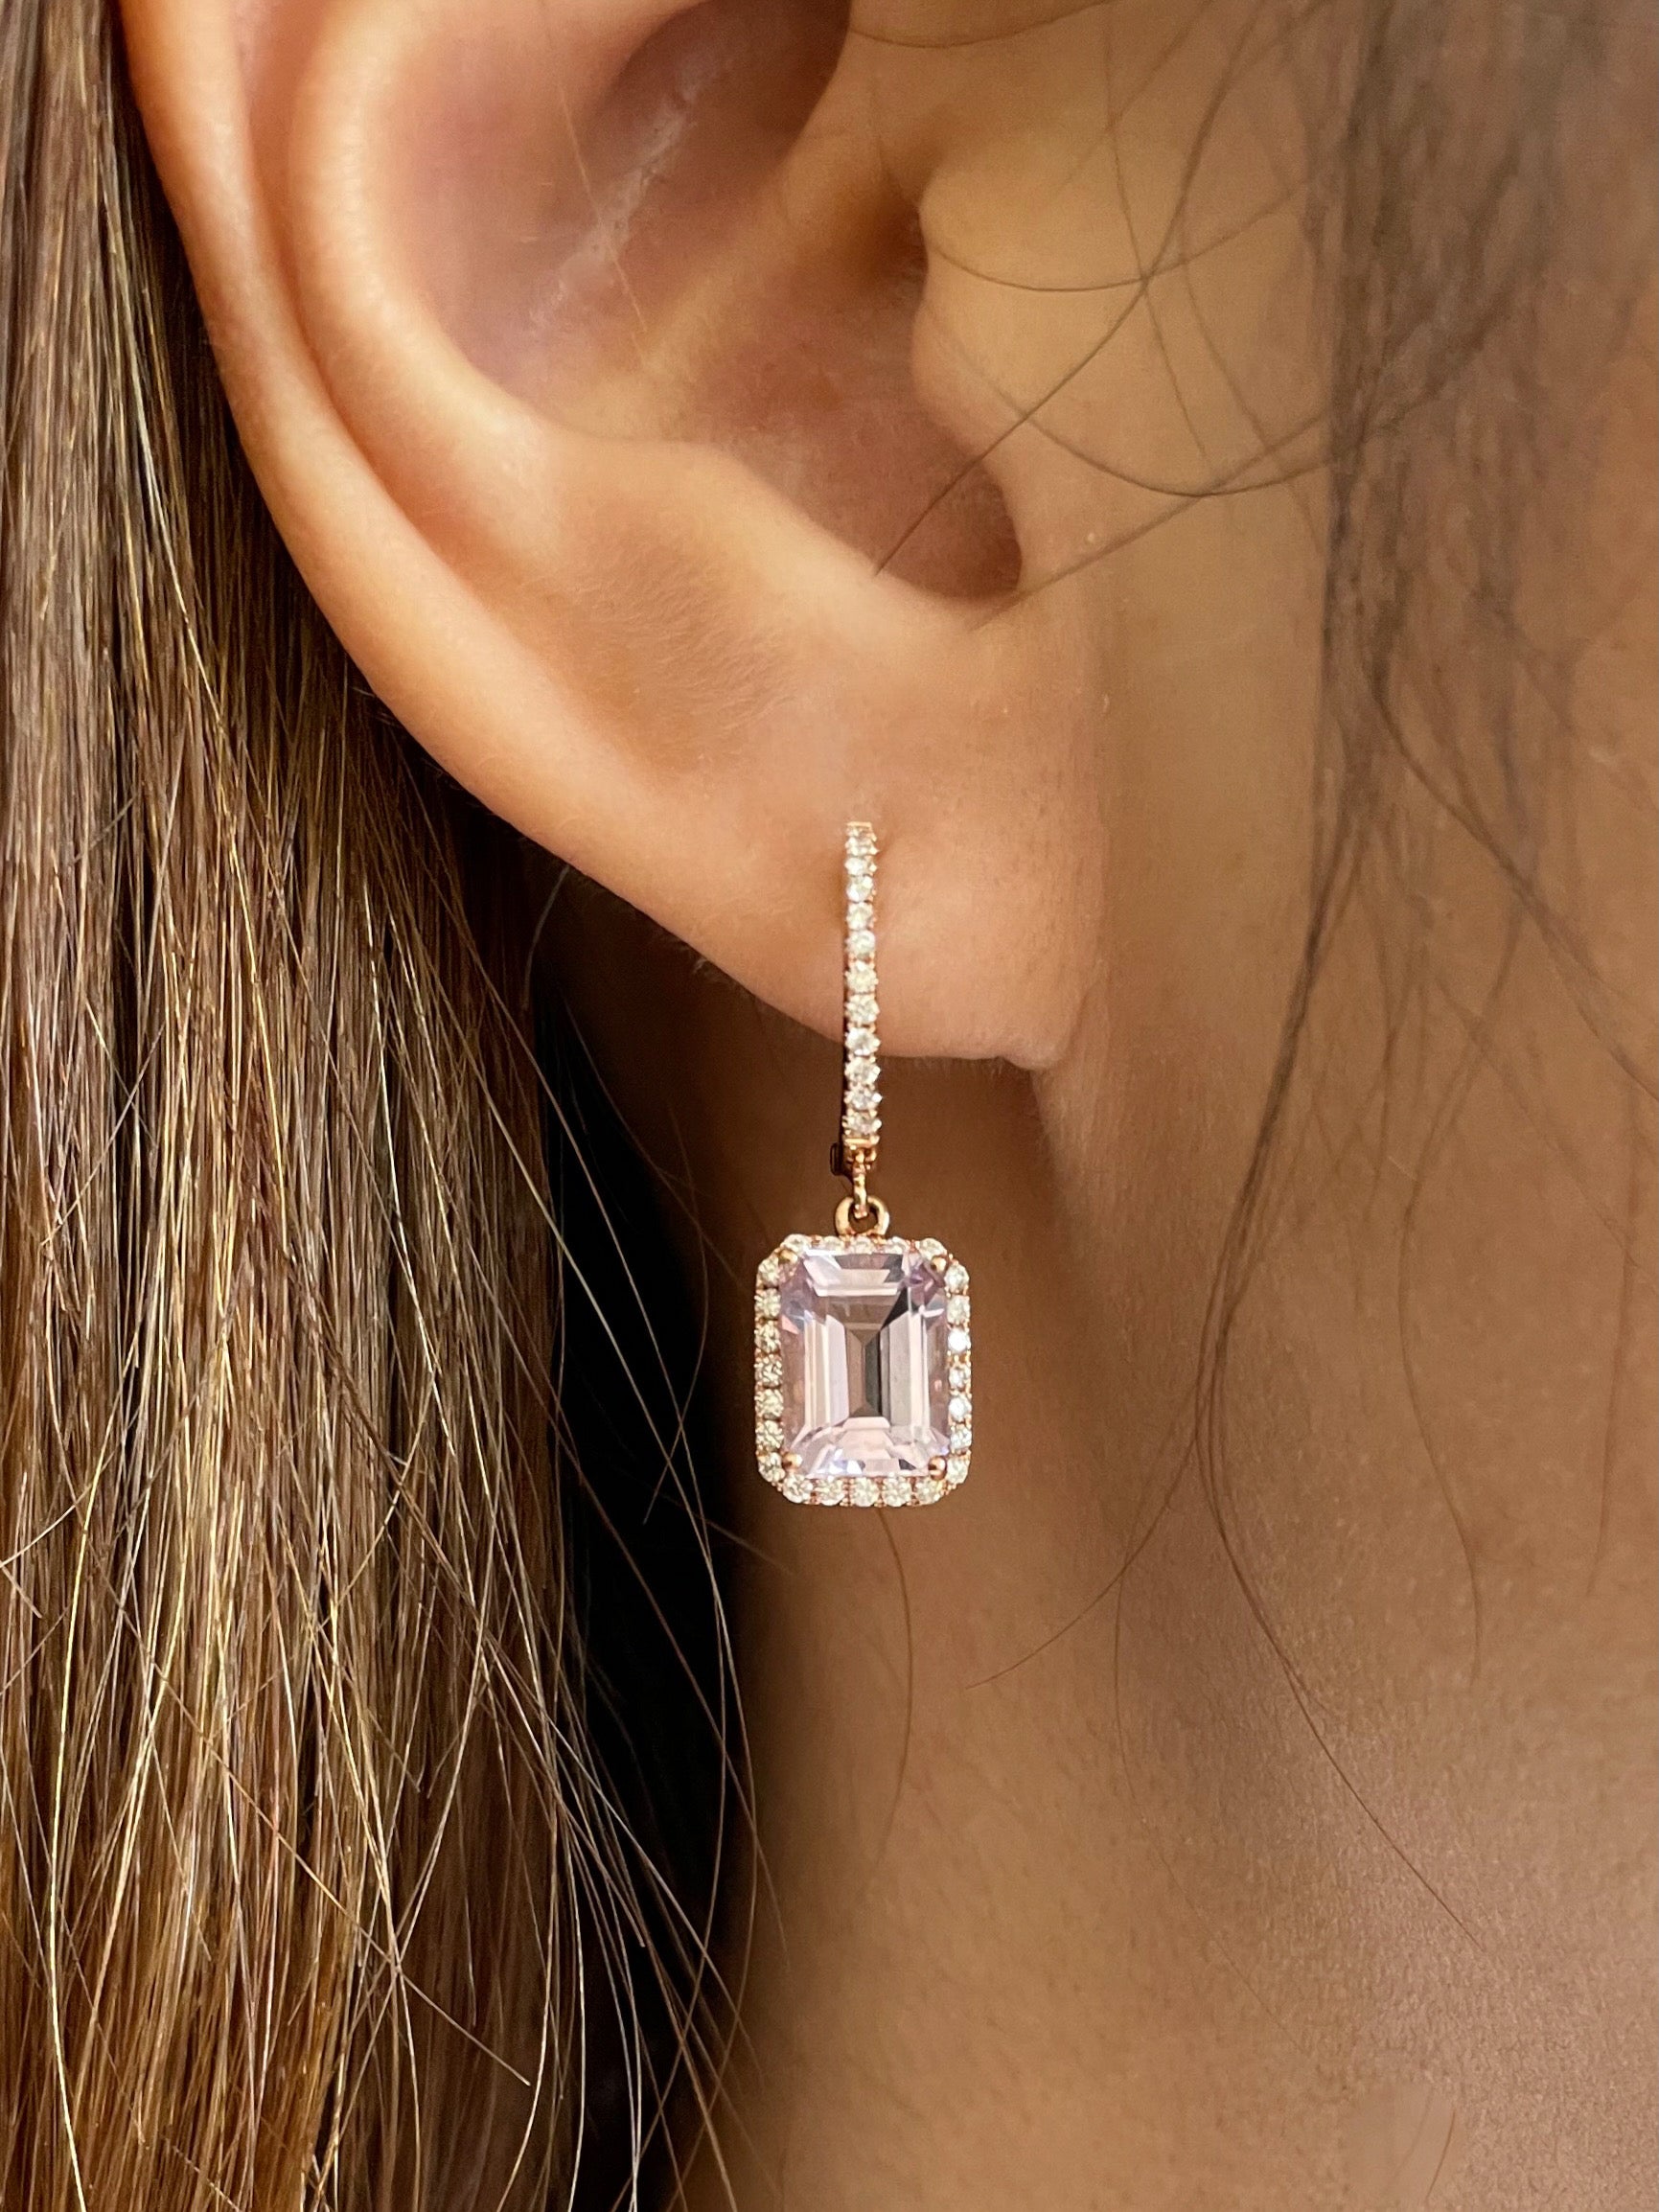 14K White Gold Emerald Cut Diamond Stud Earrings (Mounting)